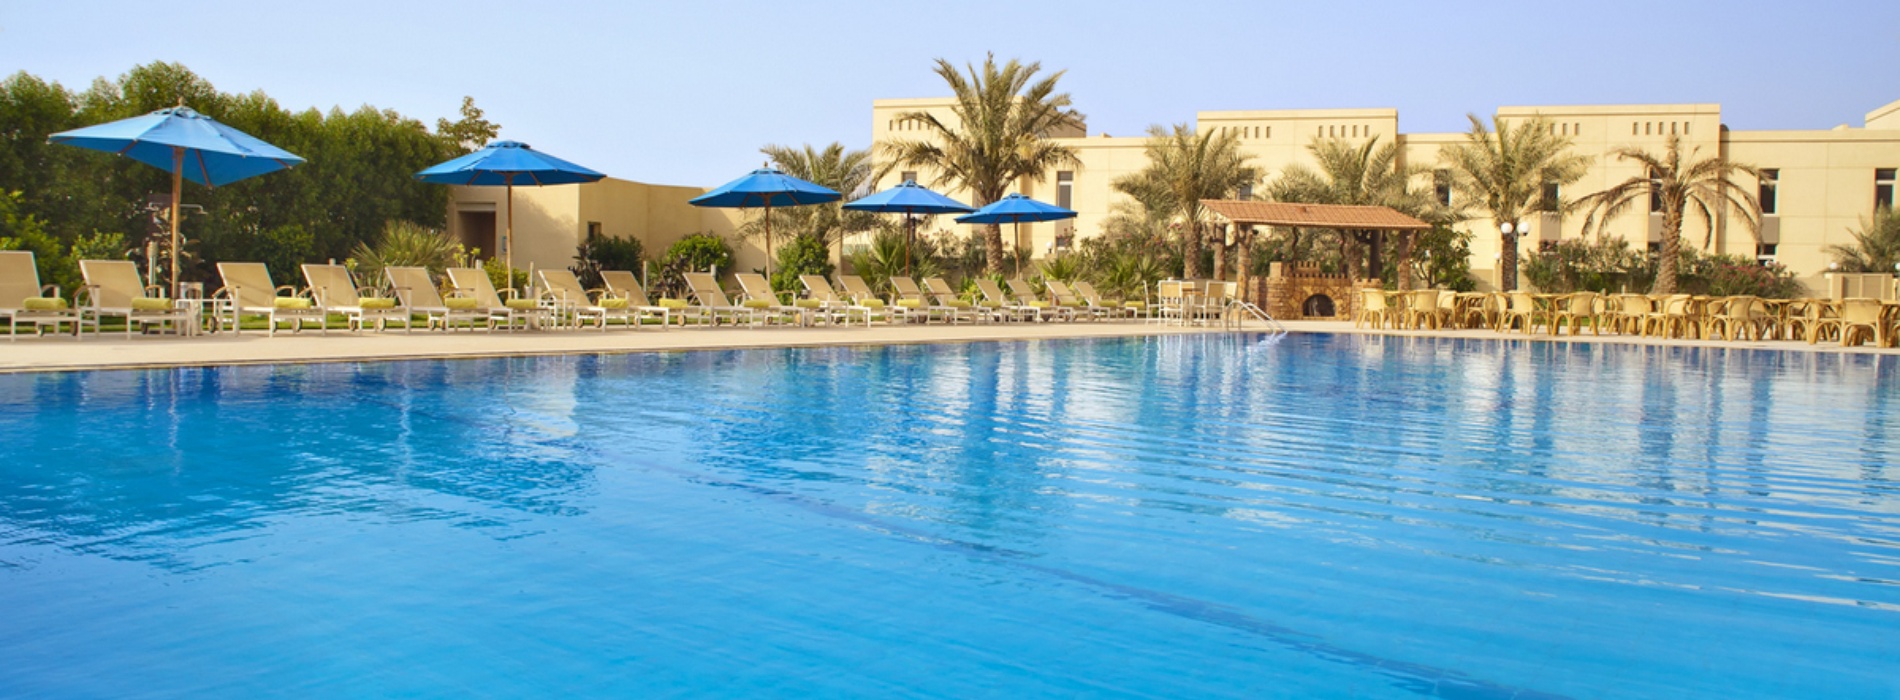 Beach Hotel Bin Majid Hotels & Resorts 4*